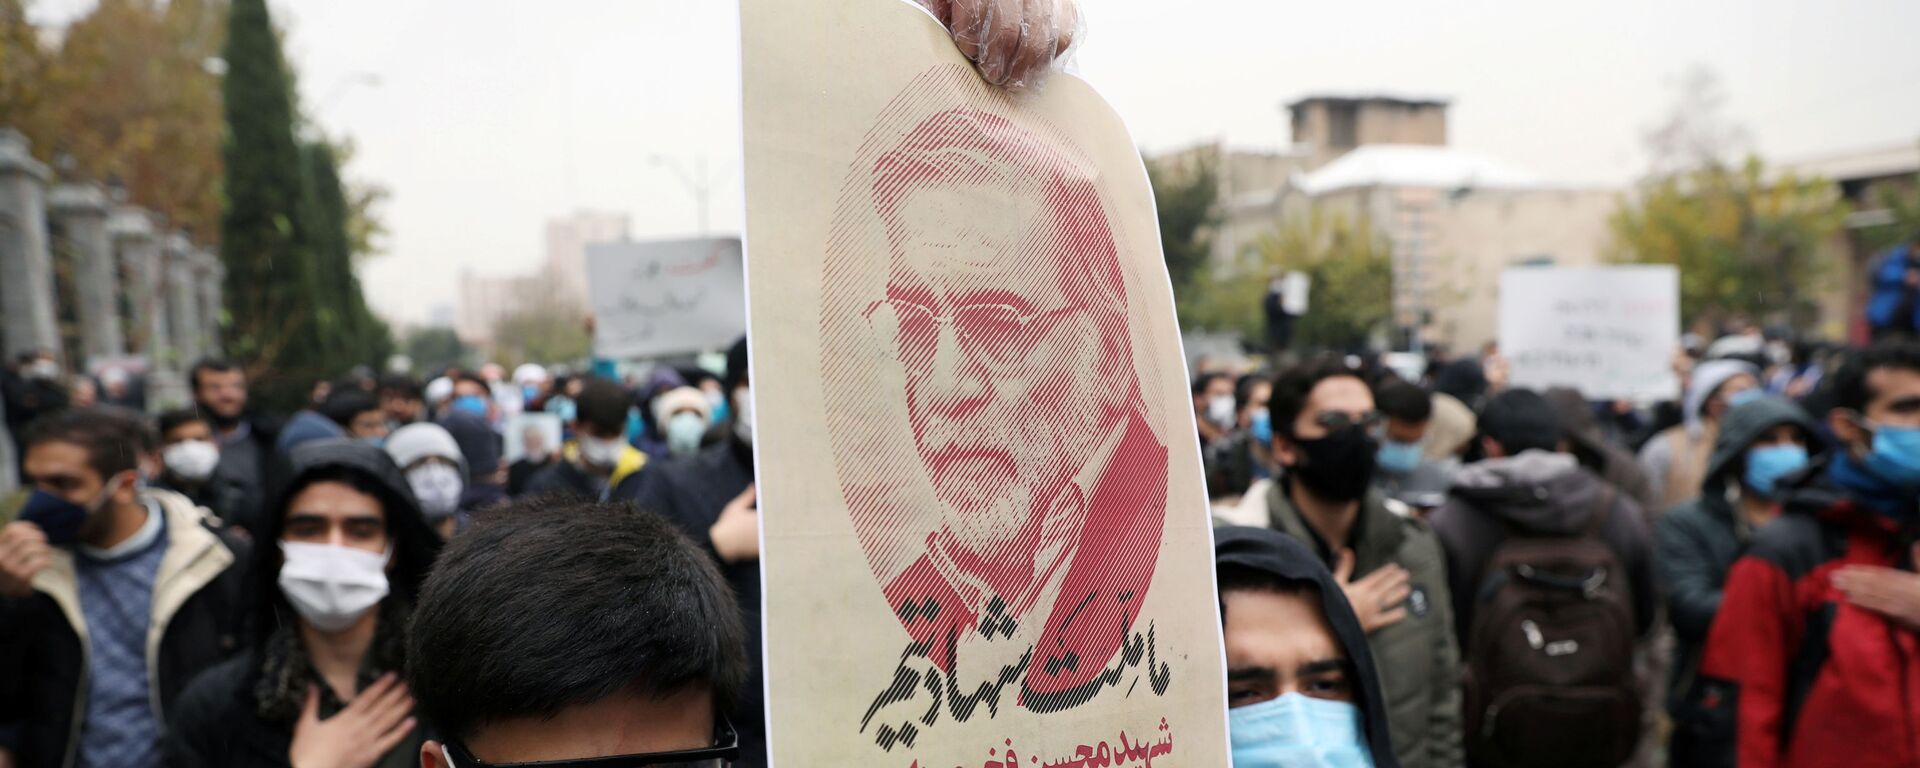 Anger in Iran over killing of Iran's top nuclear scientist - Sputnik International, 1920, 15.02.2021